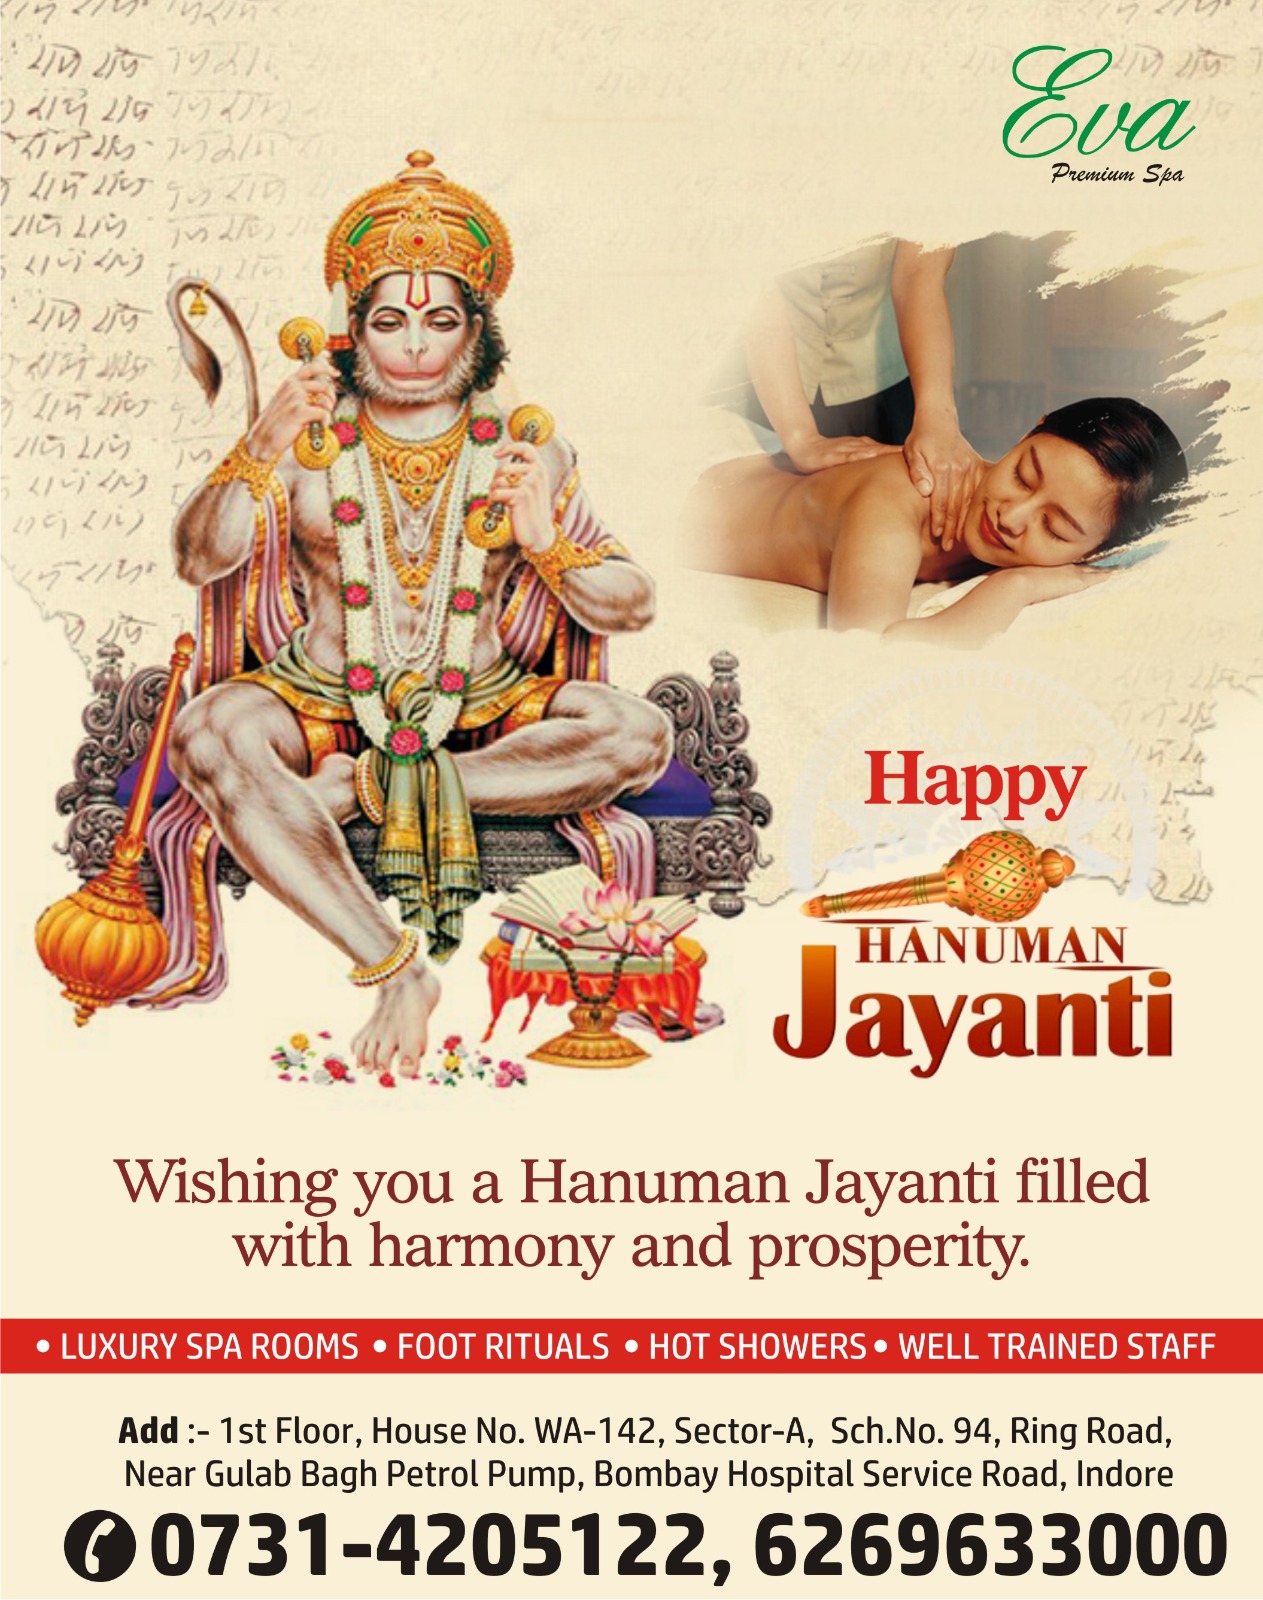 Happy Hanuman Jayanti